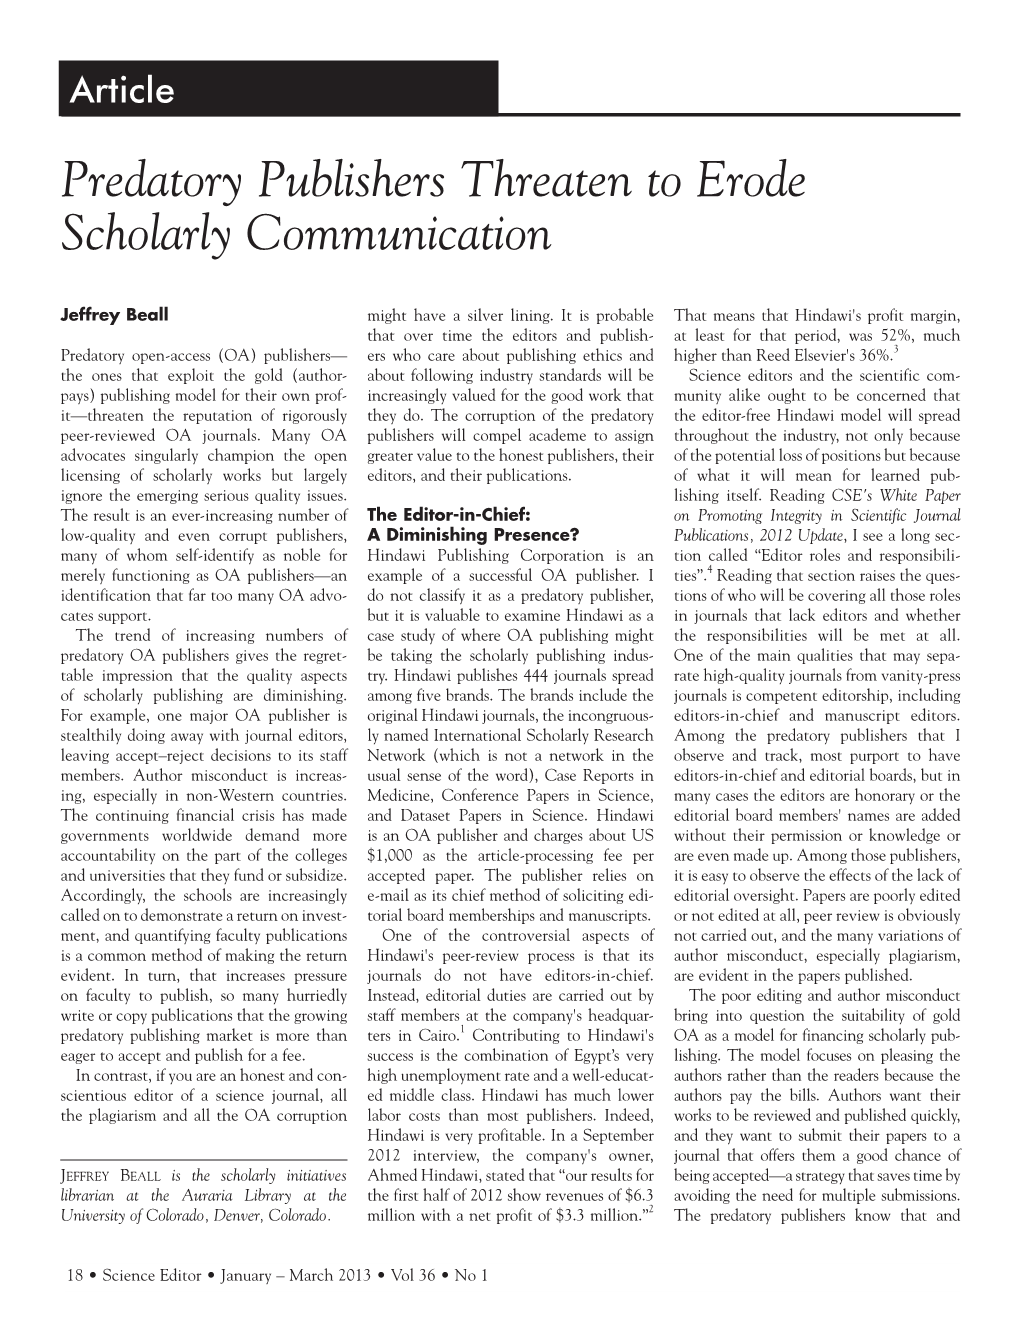 Predatory Publishers Threaten to Erode Scholarly Communication